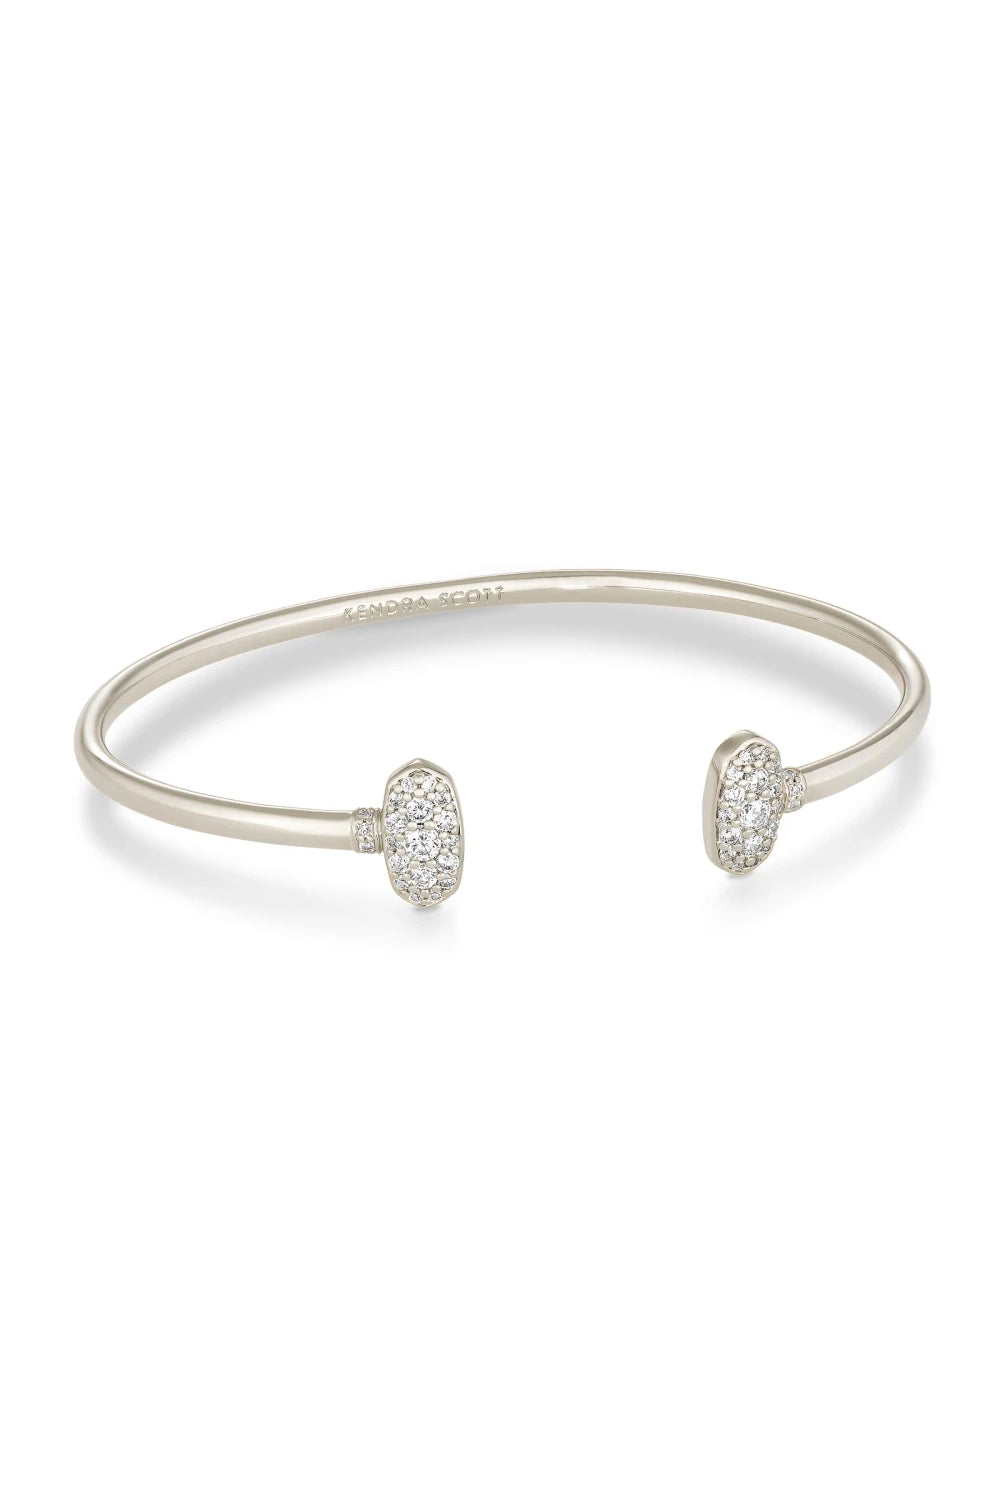 Kendra Scott: Grayson Silver Cuff Bracelet - White Crystal | Makk Fashions